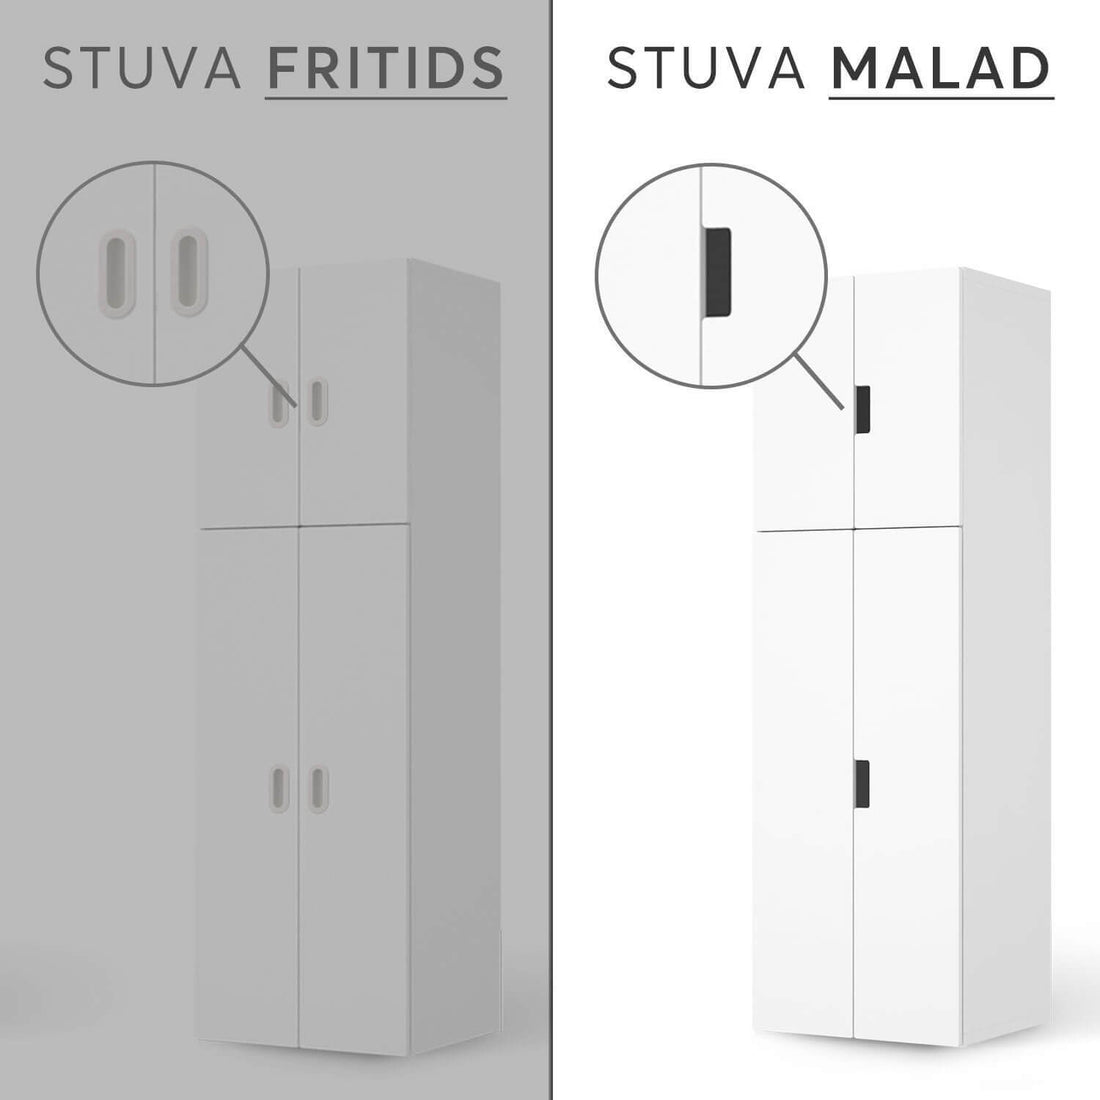 Vergleich IKEA Stuva Malad / Fritids - The Great Wall